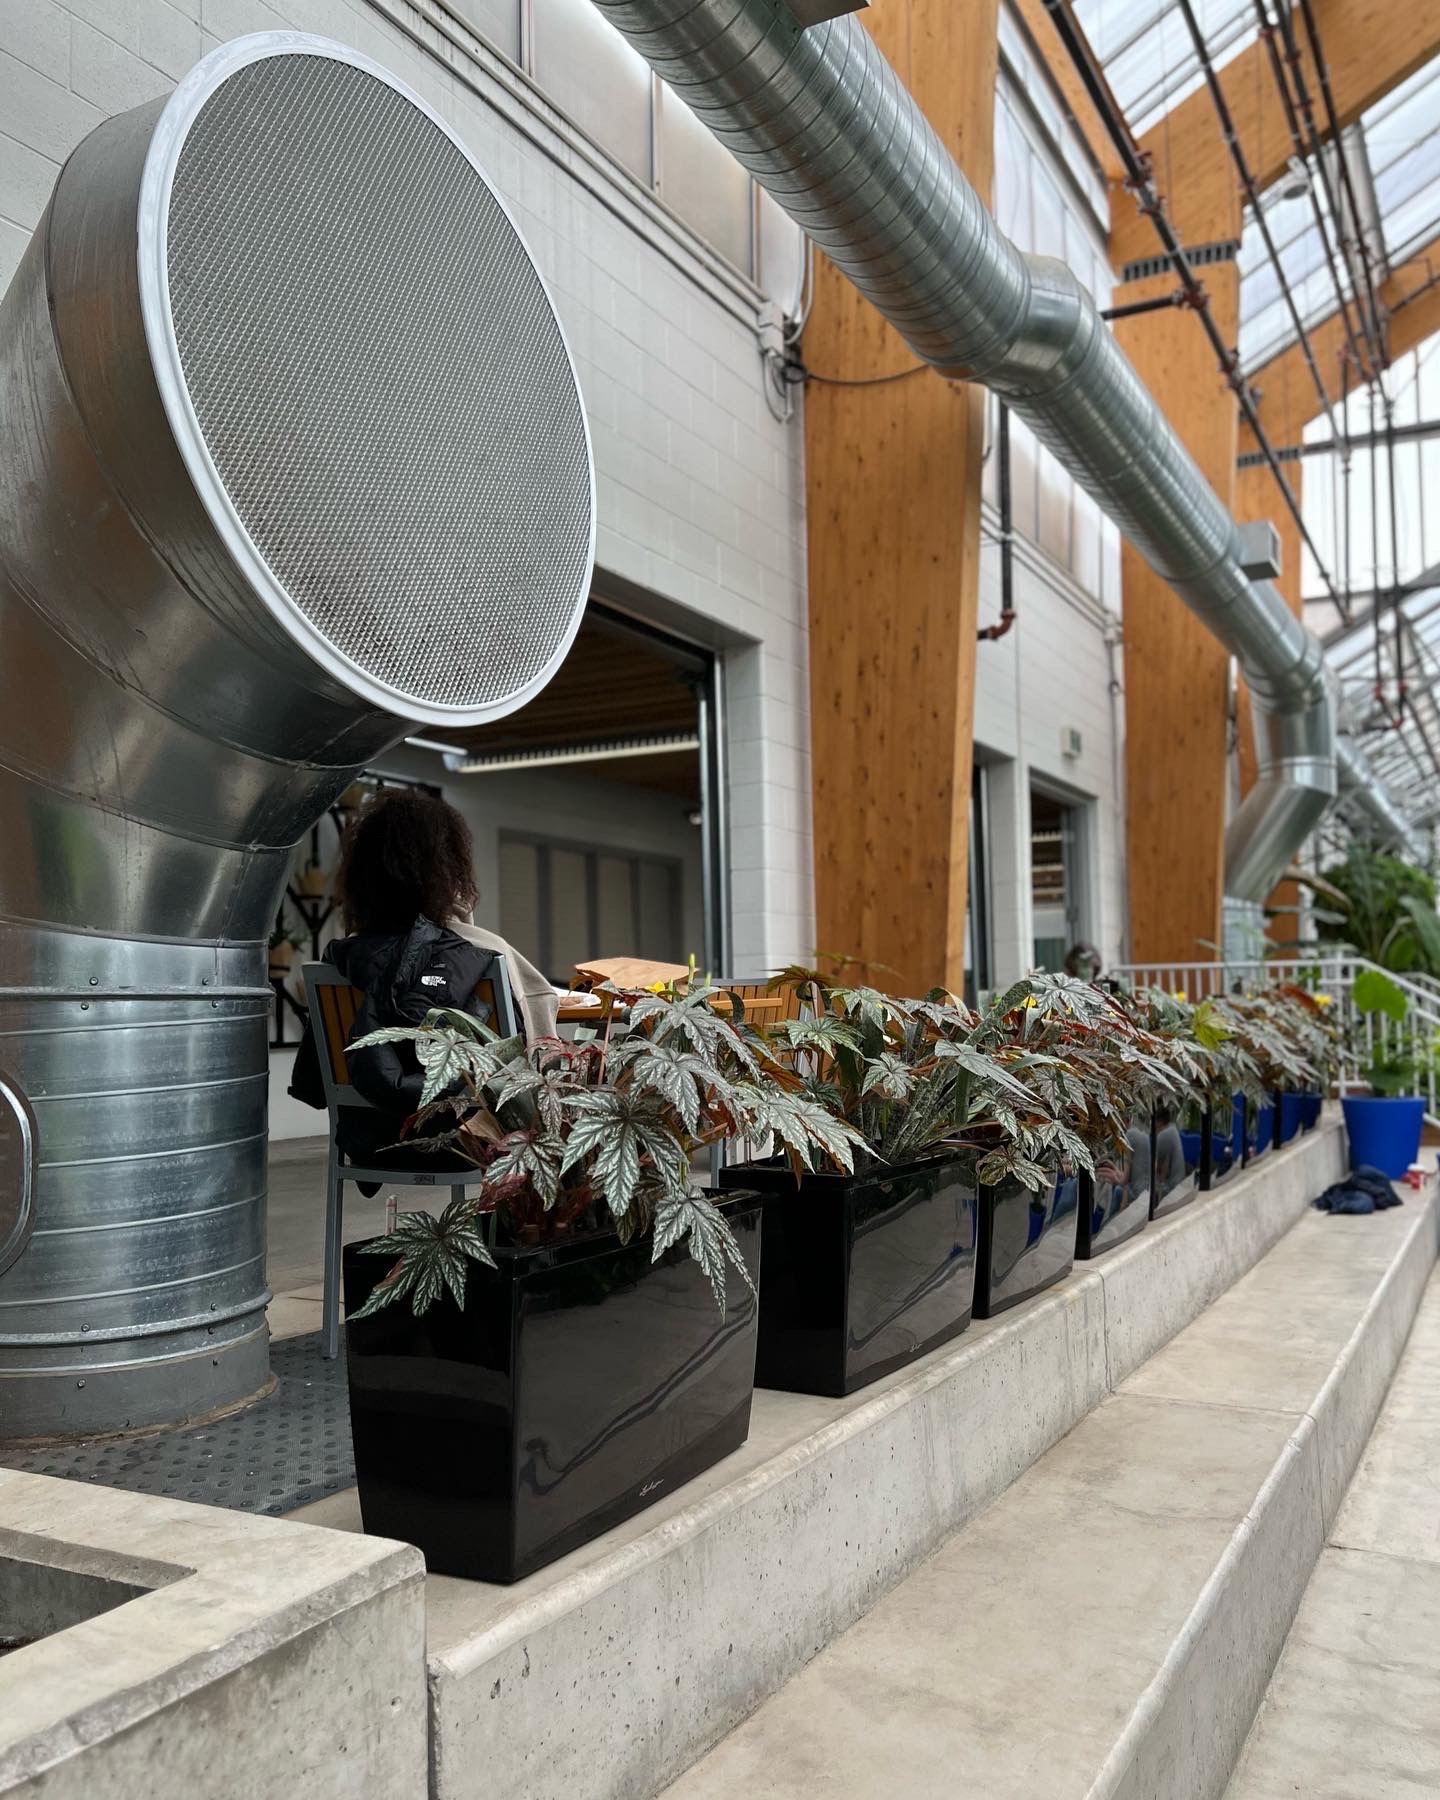 giant greenhouse vent